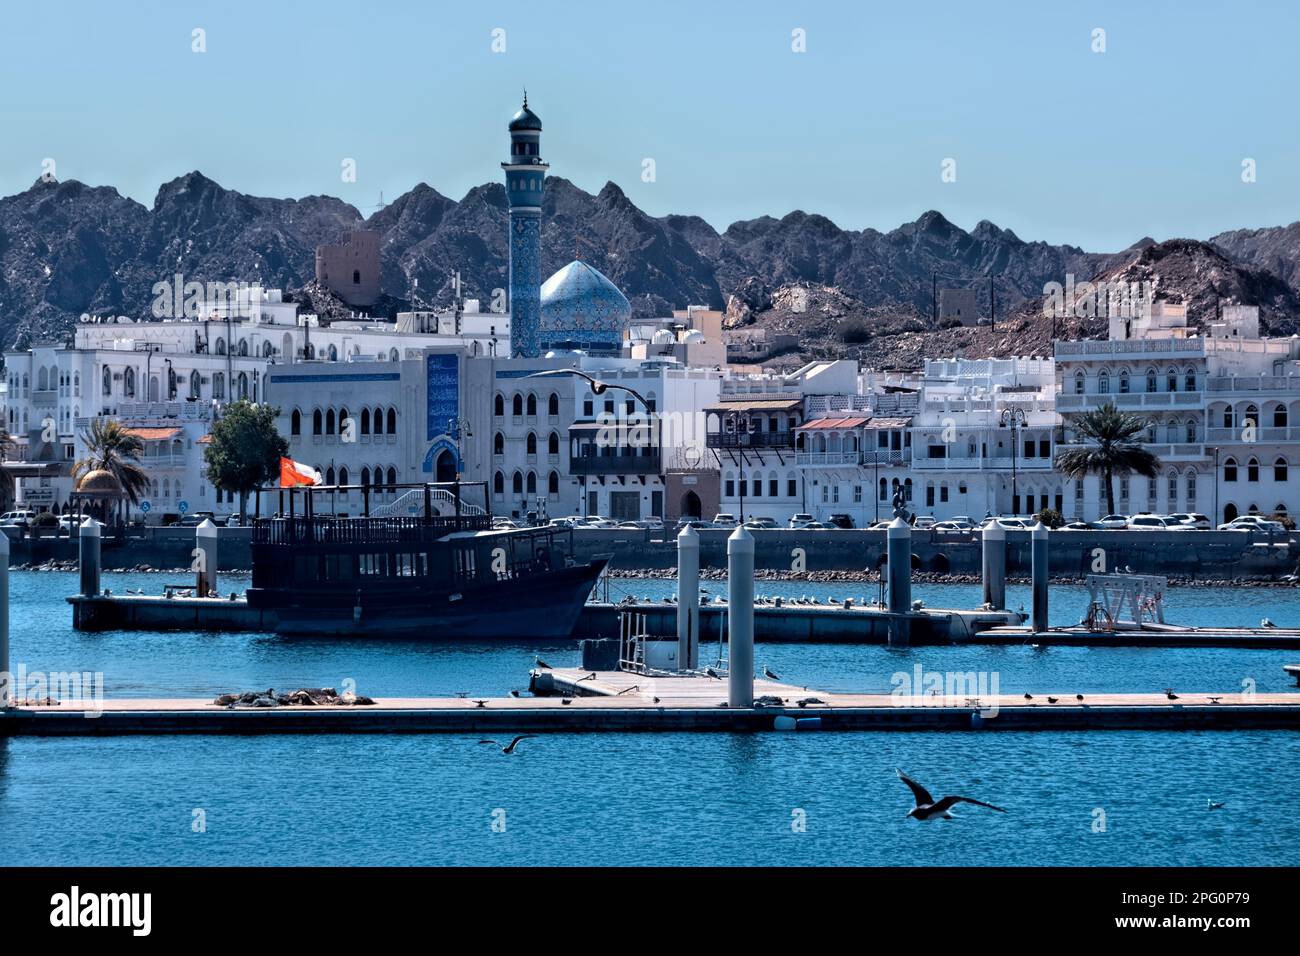 View of the Mutrah Corniche and Al Rasool Mosque, Muscat, Oman Stock Photo